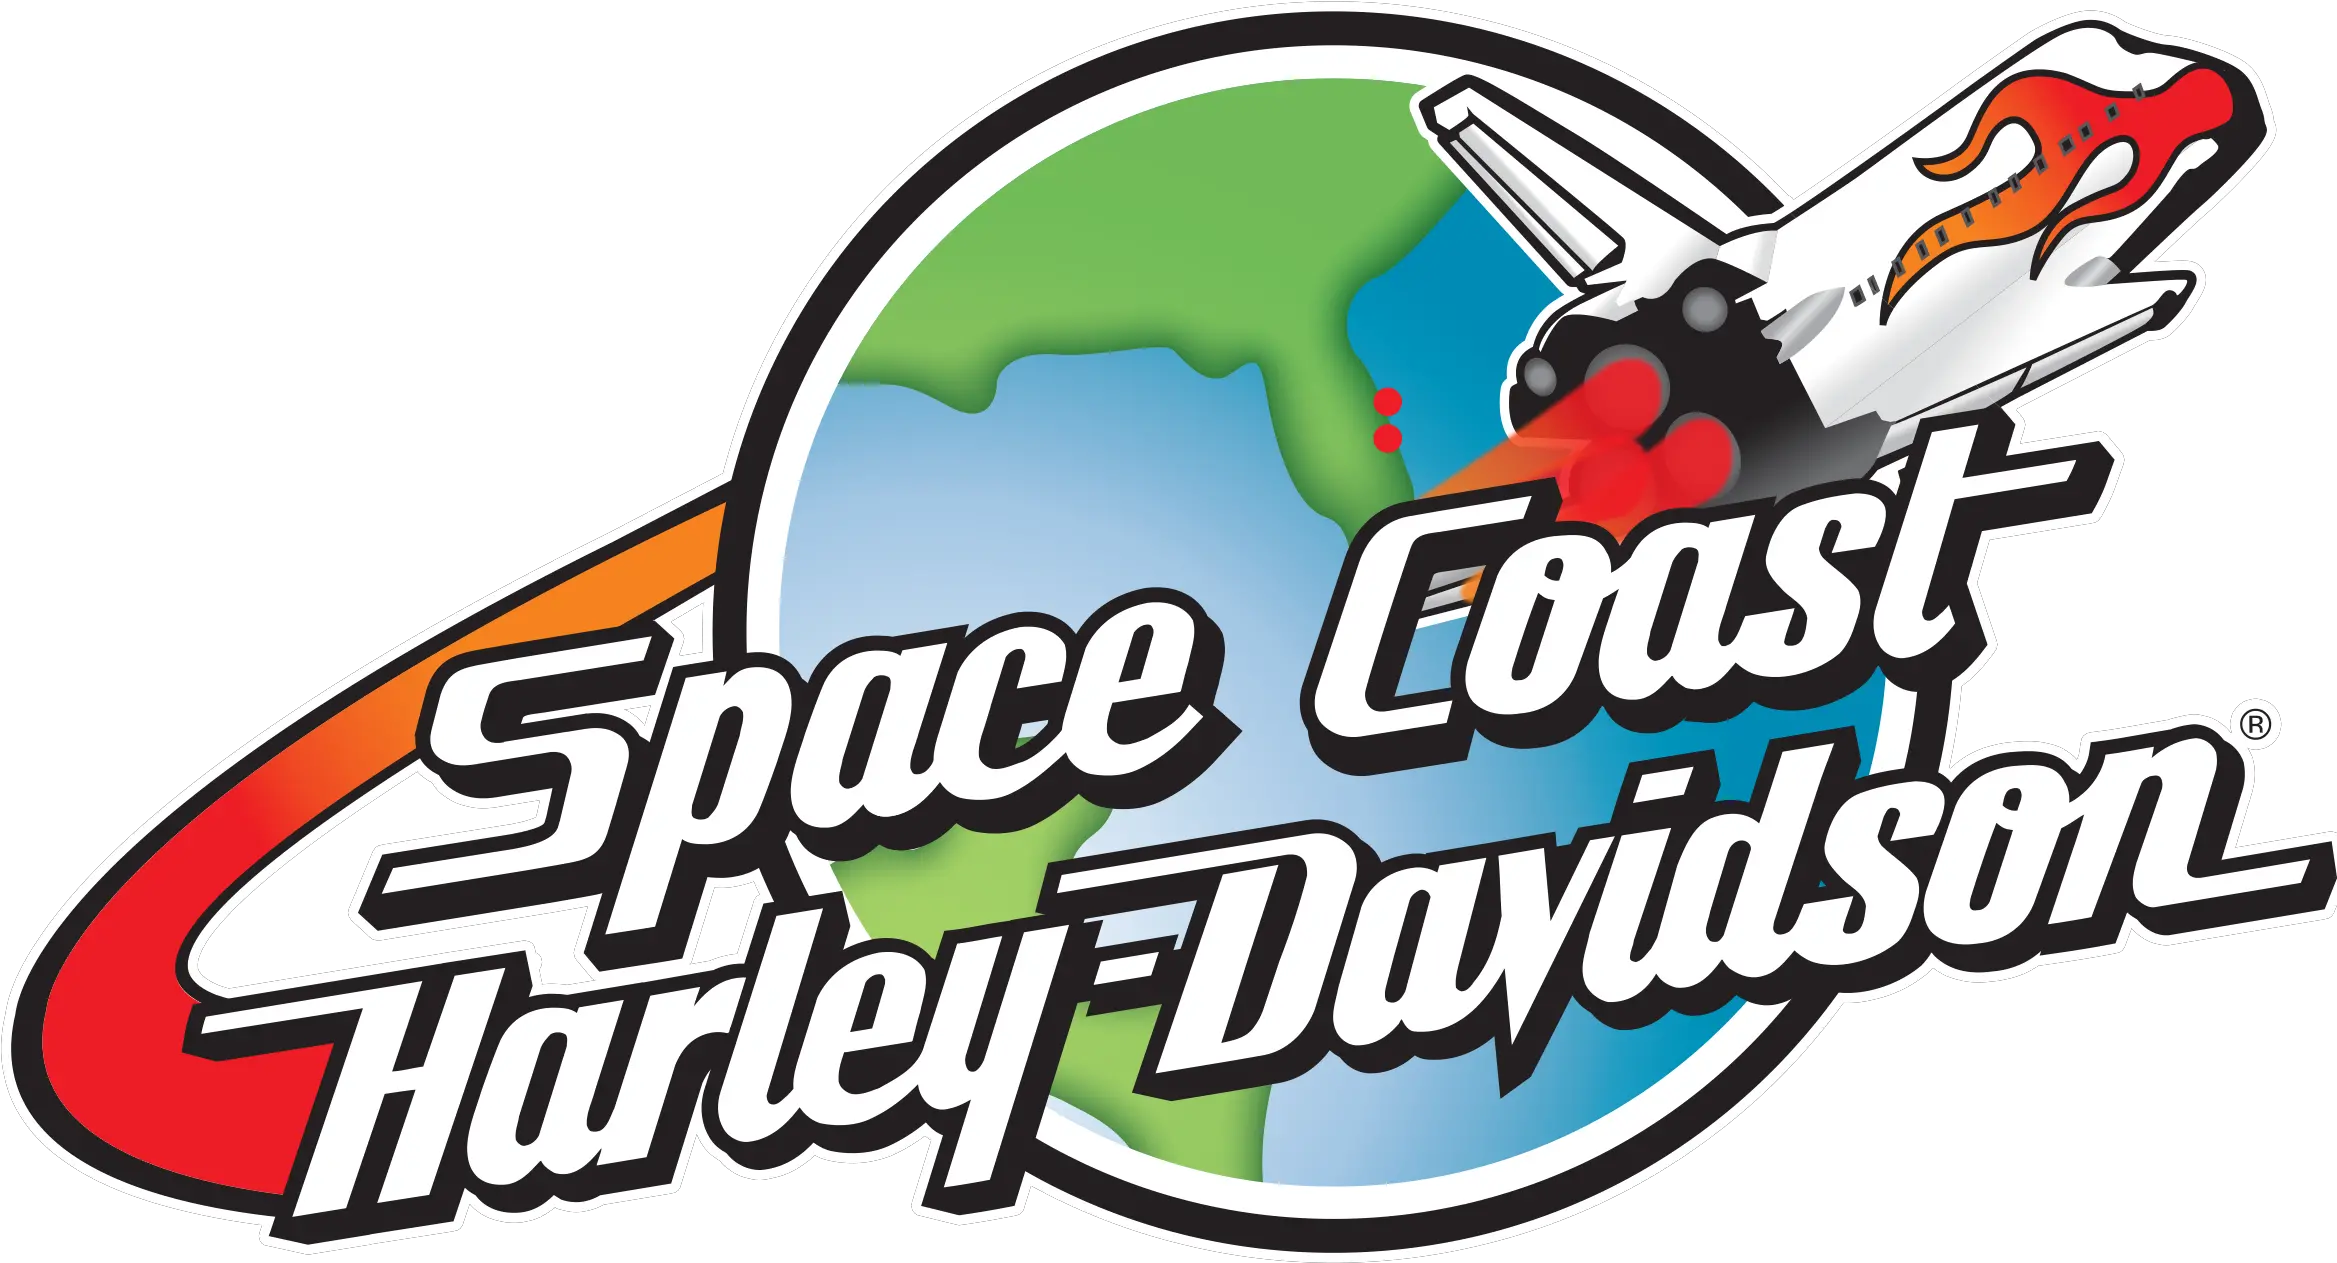 Space Coast Harley Davidson Harleydavidson Dealer In Palm Space Coast Harley Davidson Png Images Of Harley Davidson Logo